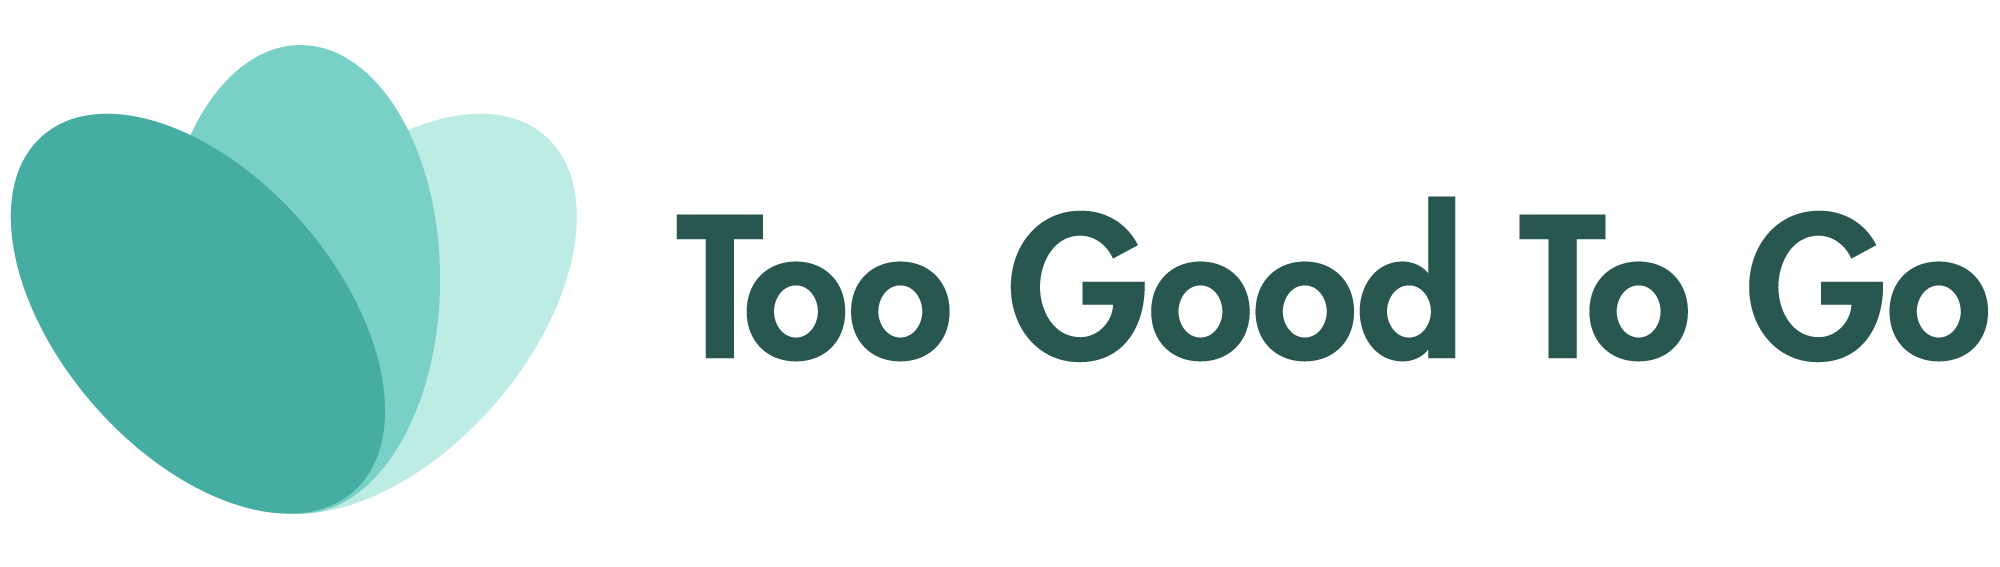 TGTG_Vertical_Logo_2000x566px_RGB-(1)